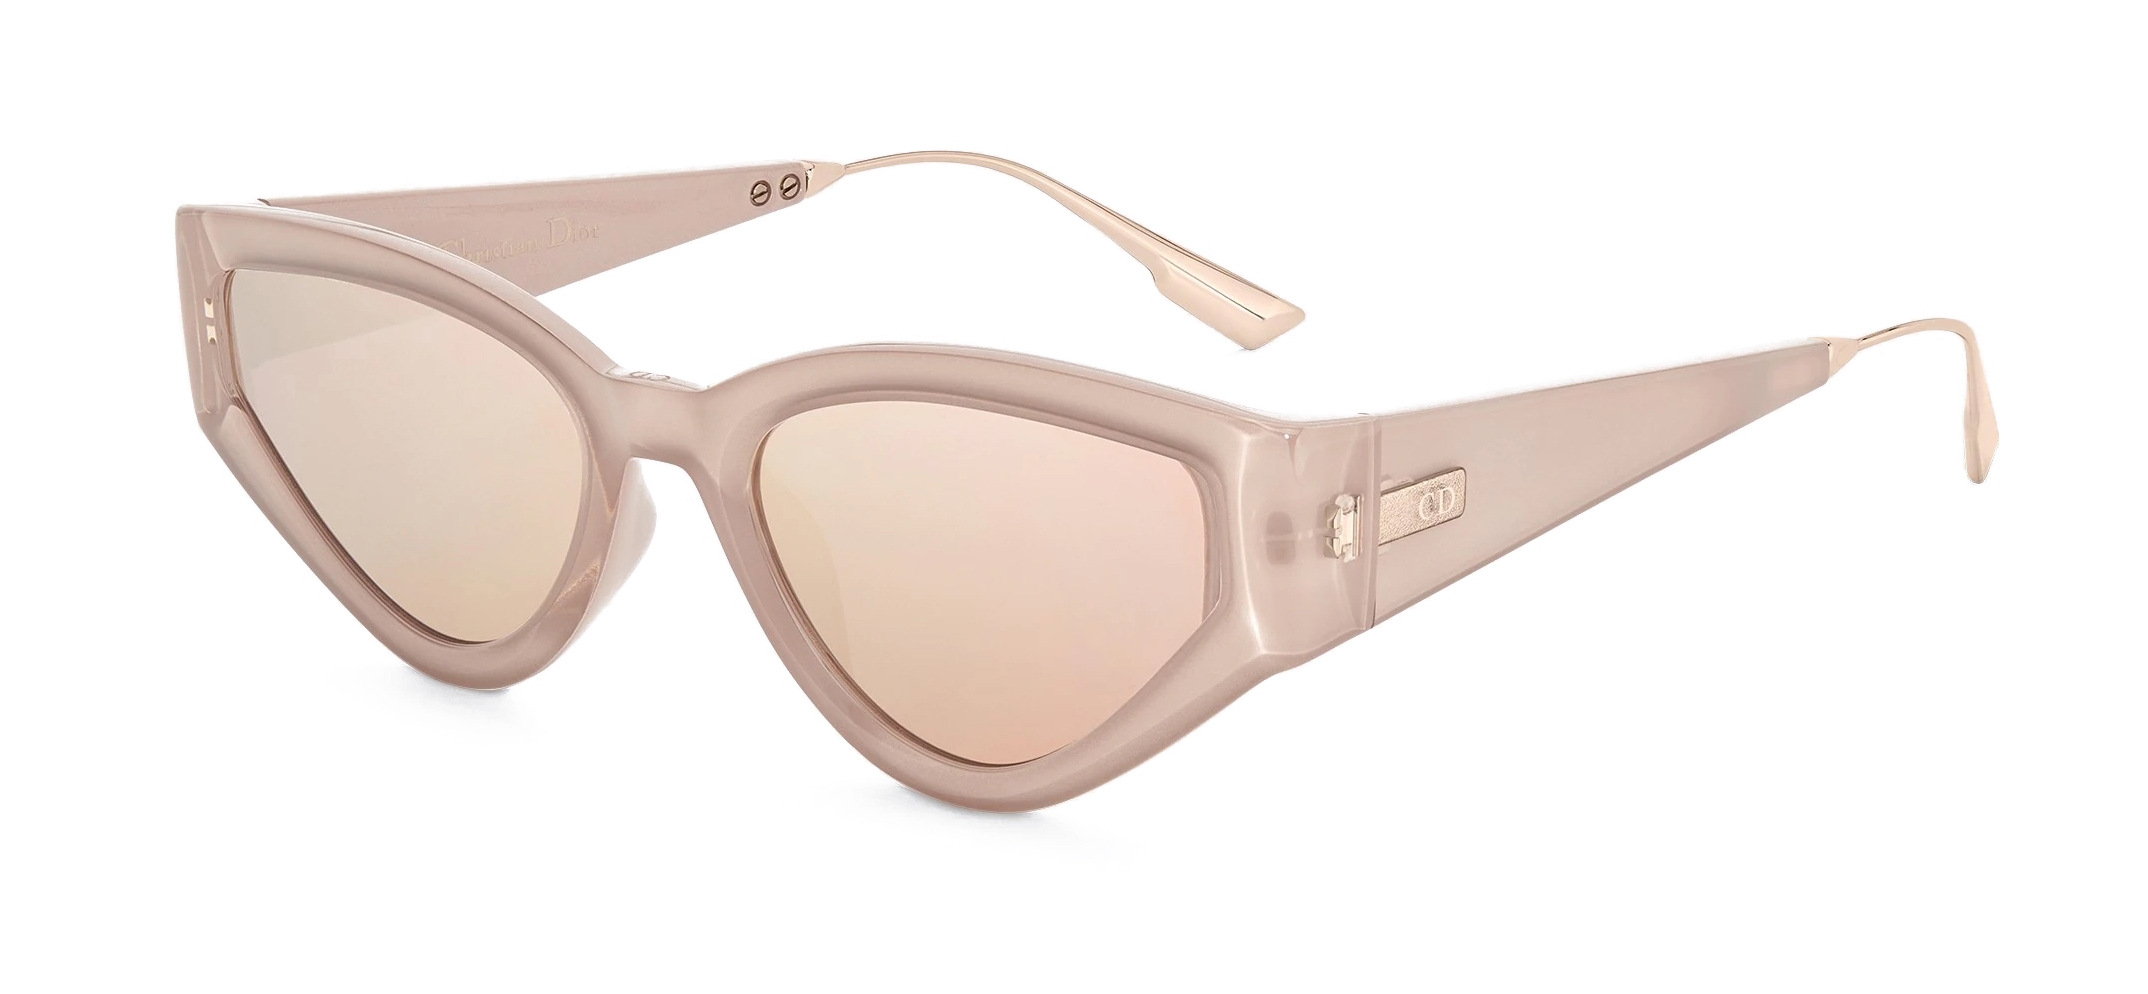 Christian Dior Sunglasses CatStyleDior1 8072K BlackGrey 5320145mm   EyeSpecscom